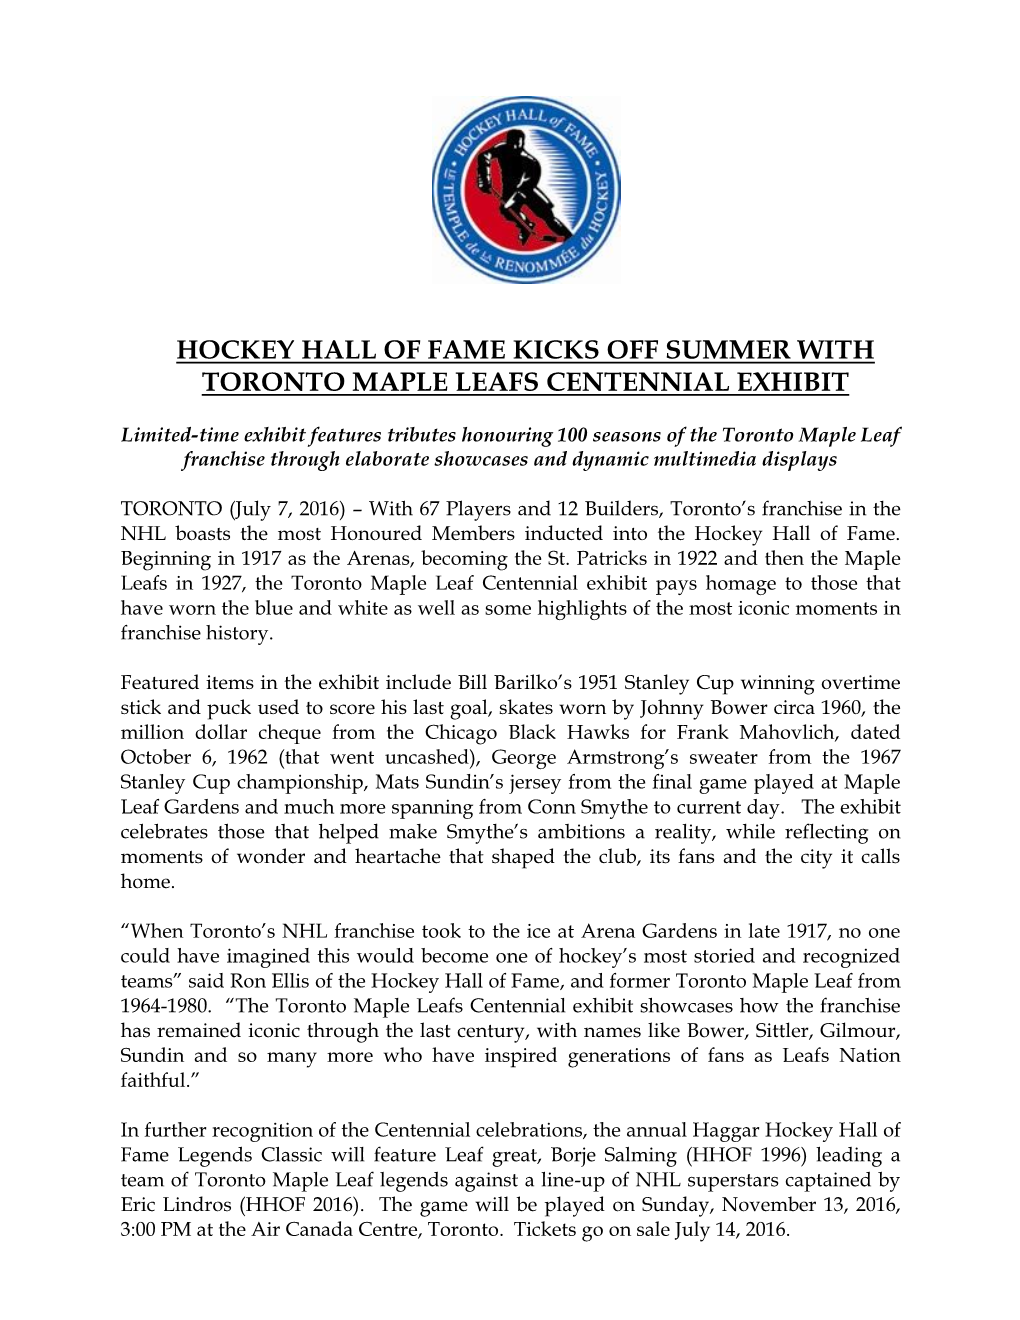 Hockey Hall of Fame Kicks Off Summer with Toronto Maple Leafs Centennial Exhibit